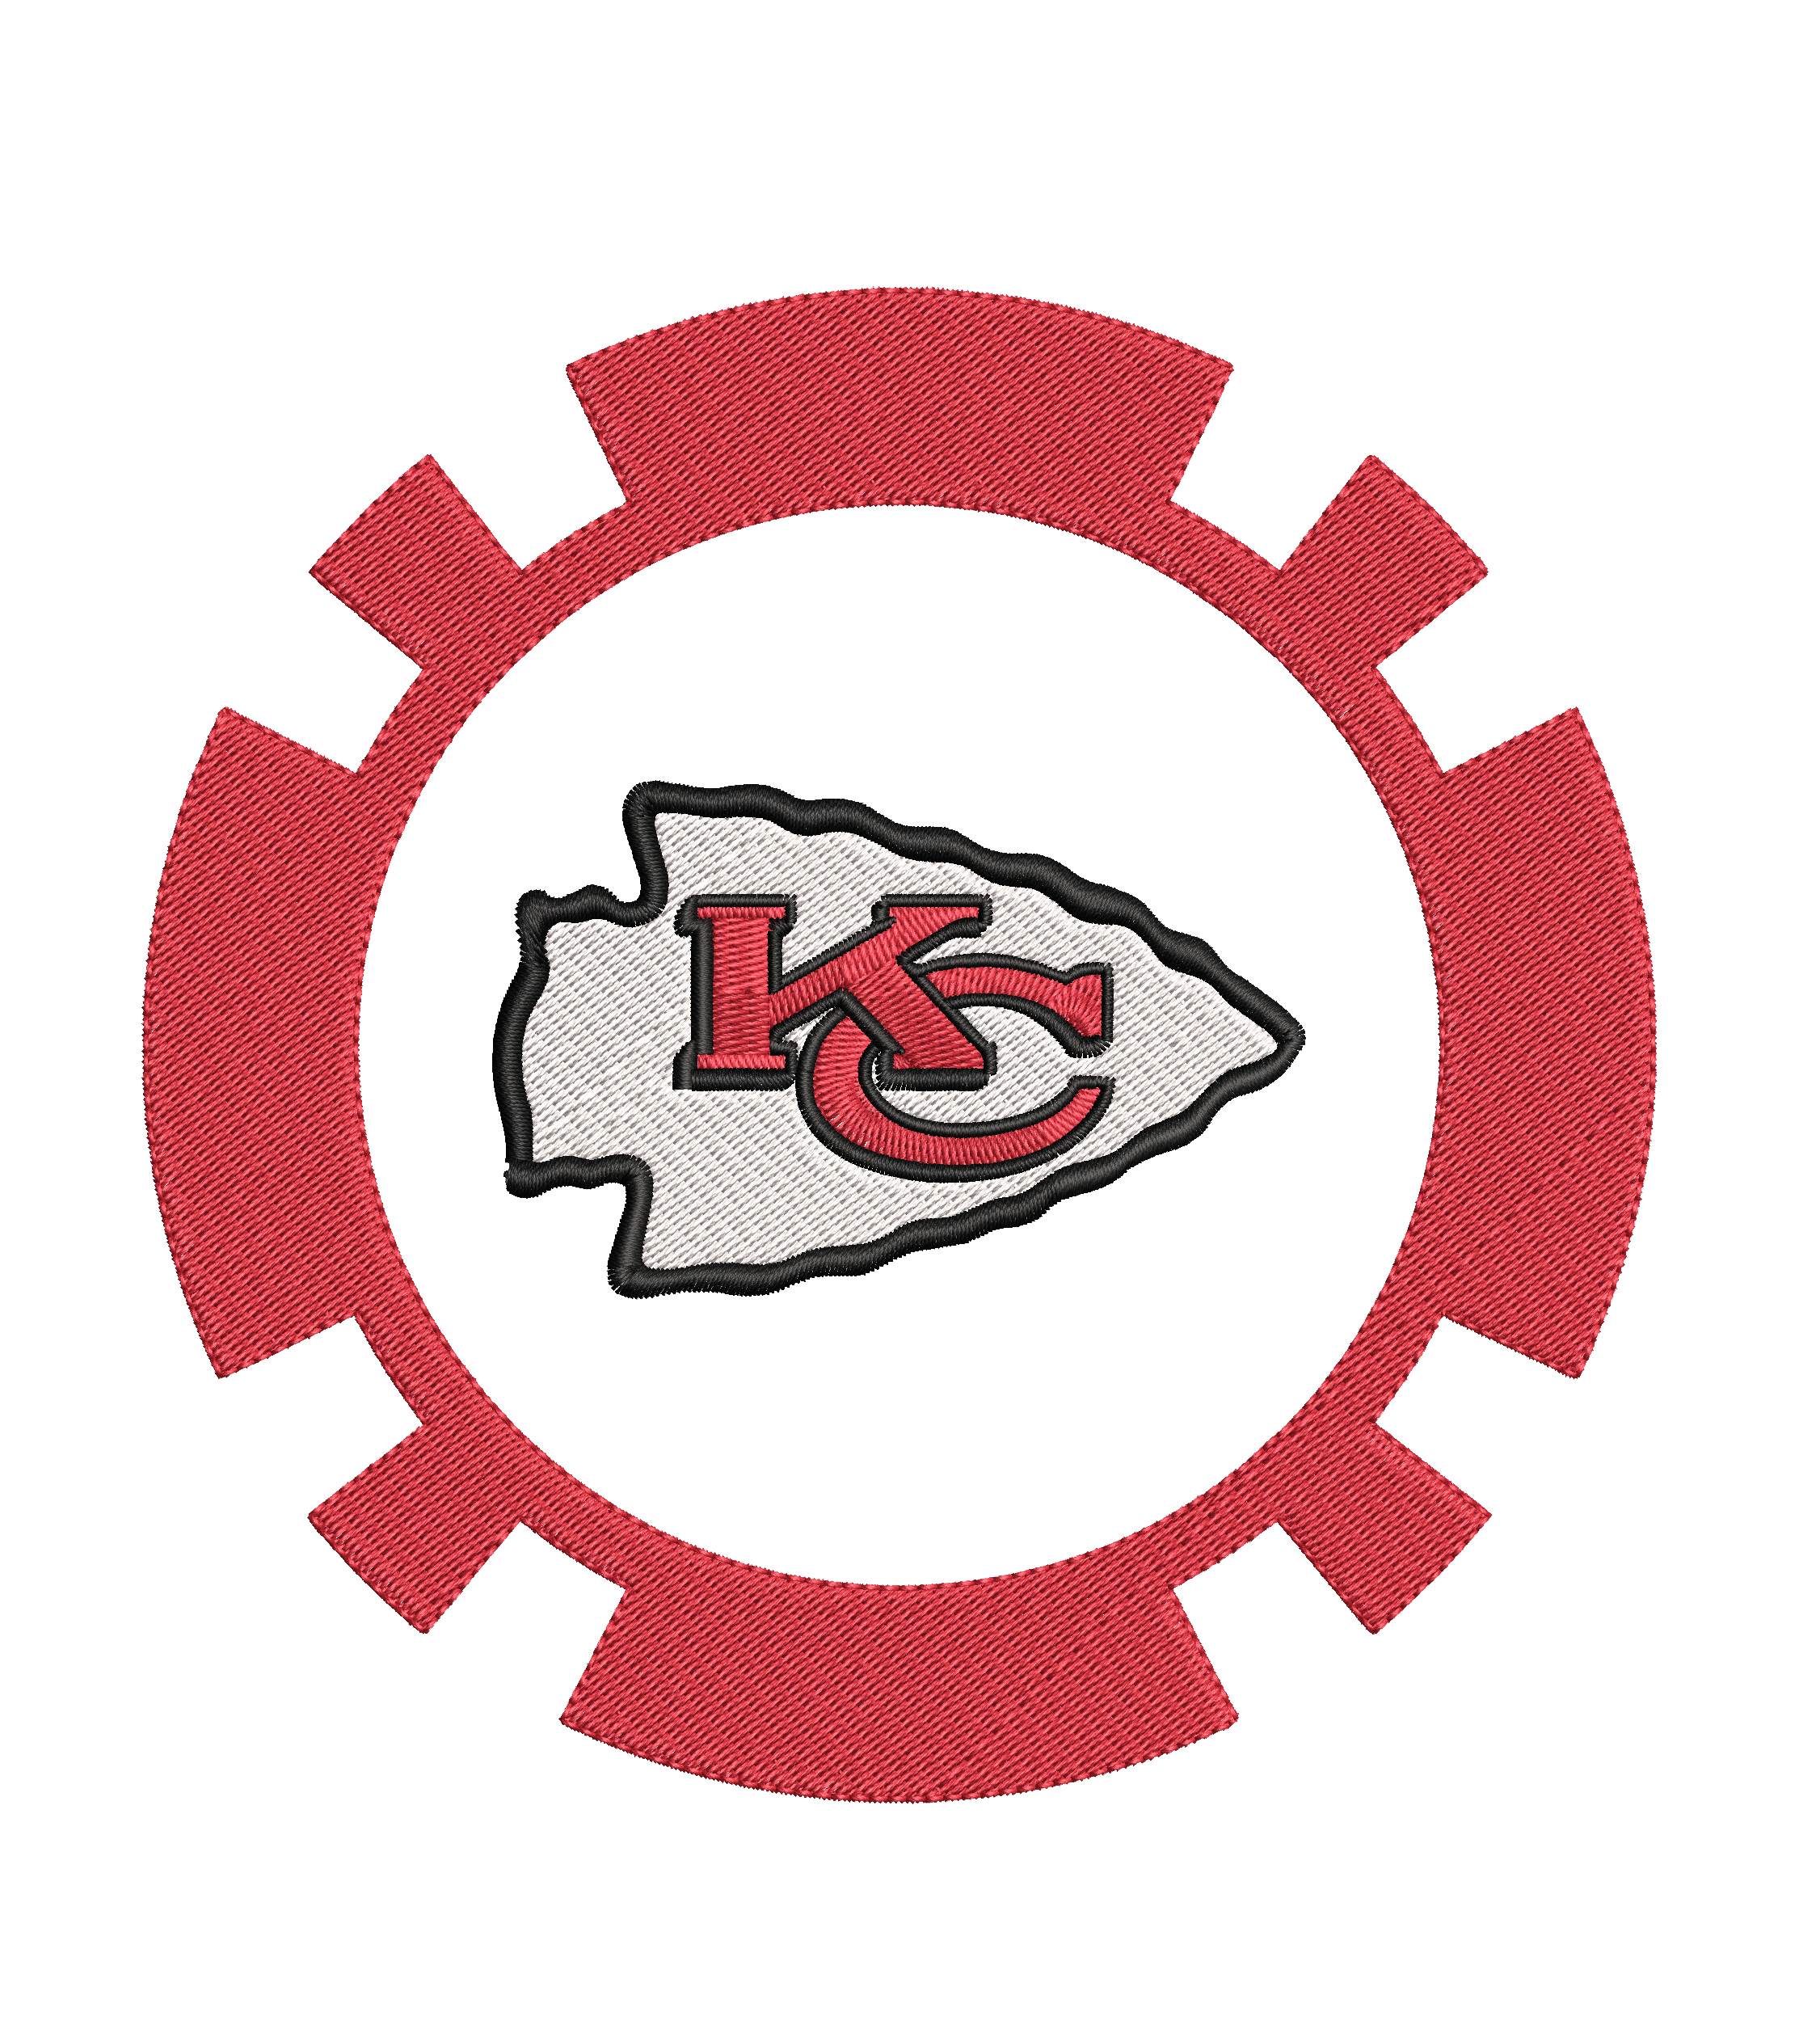 Kansas City Chiefs 5 : Embroidery Design